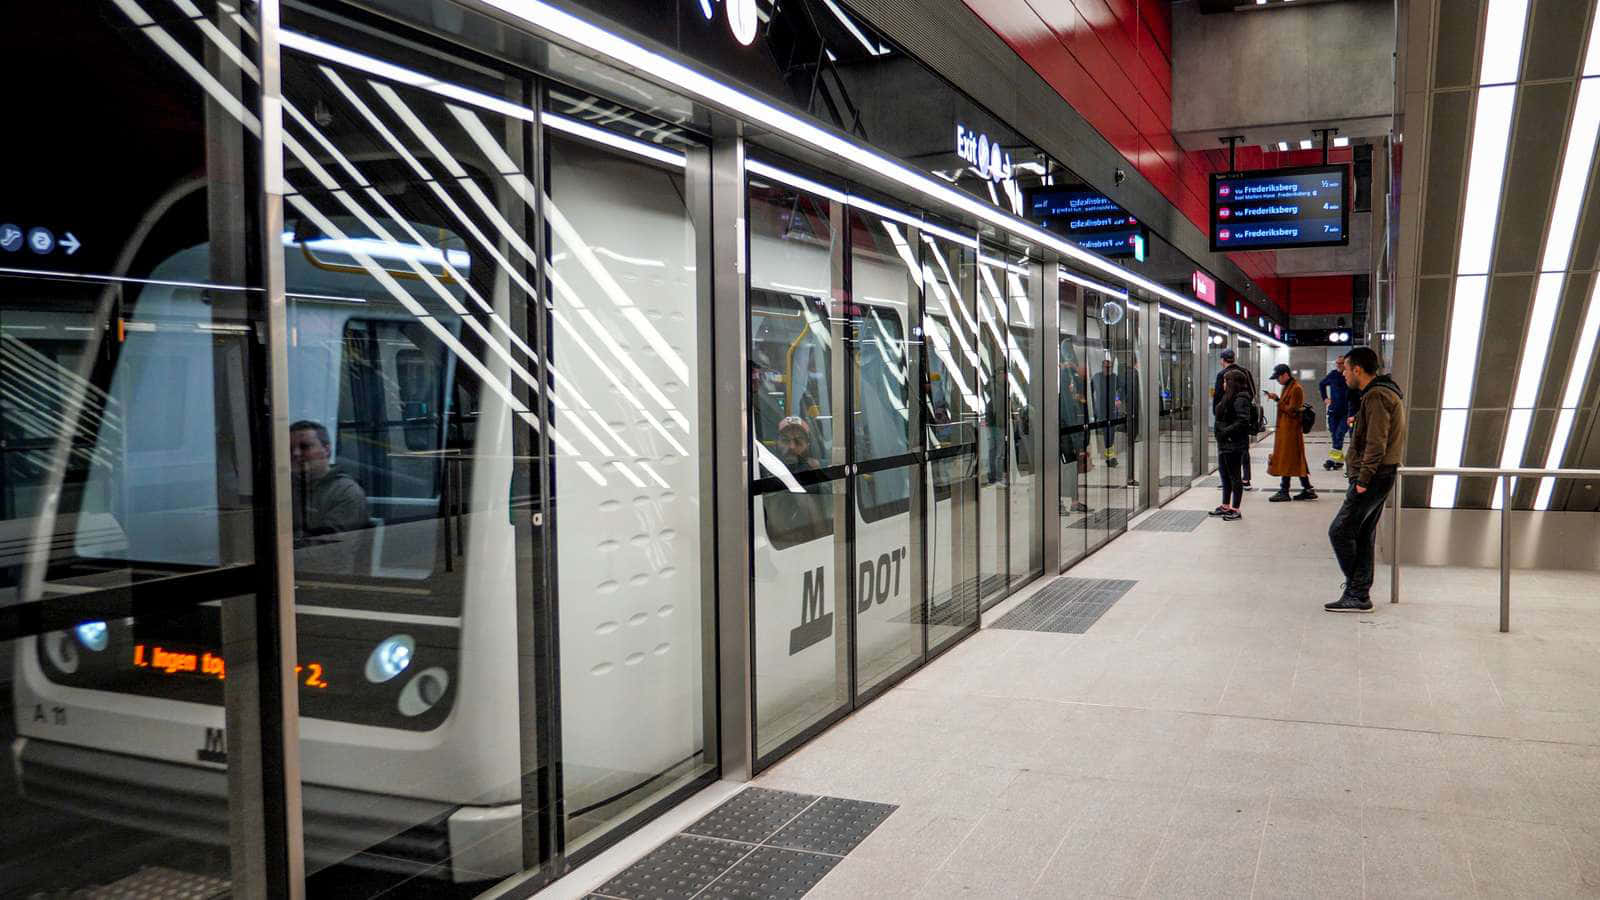 Imagendel Famoso Metro Subterráneo De Londres.